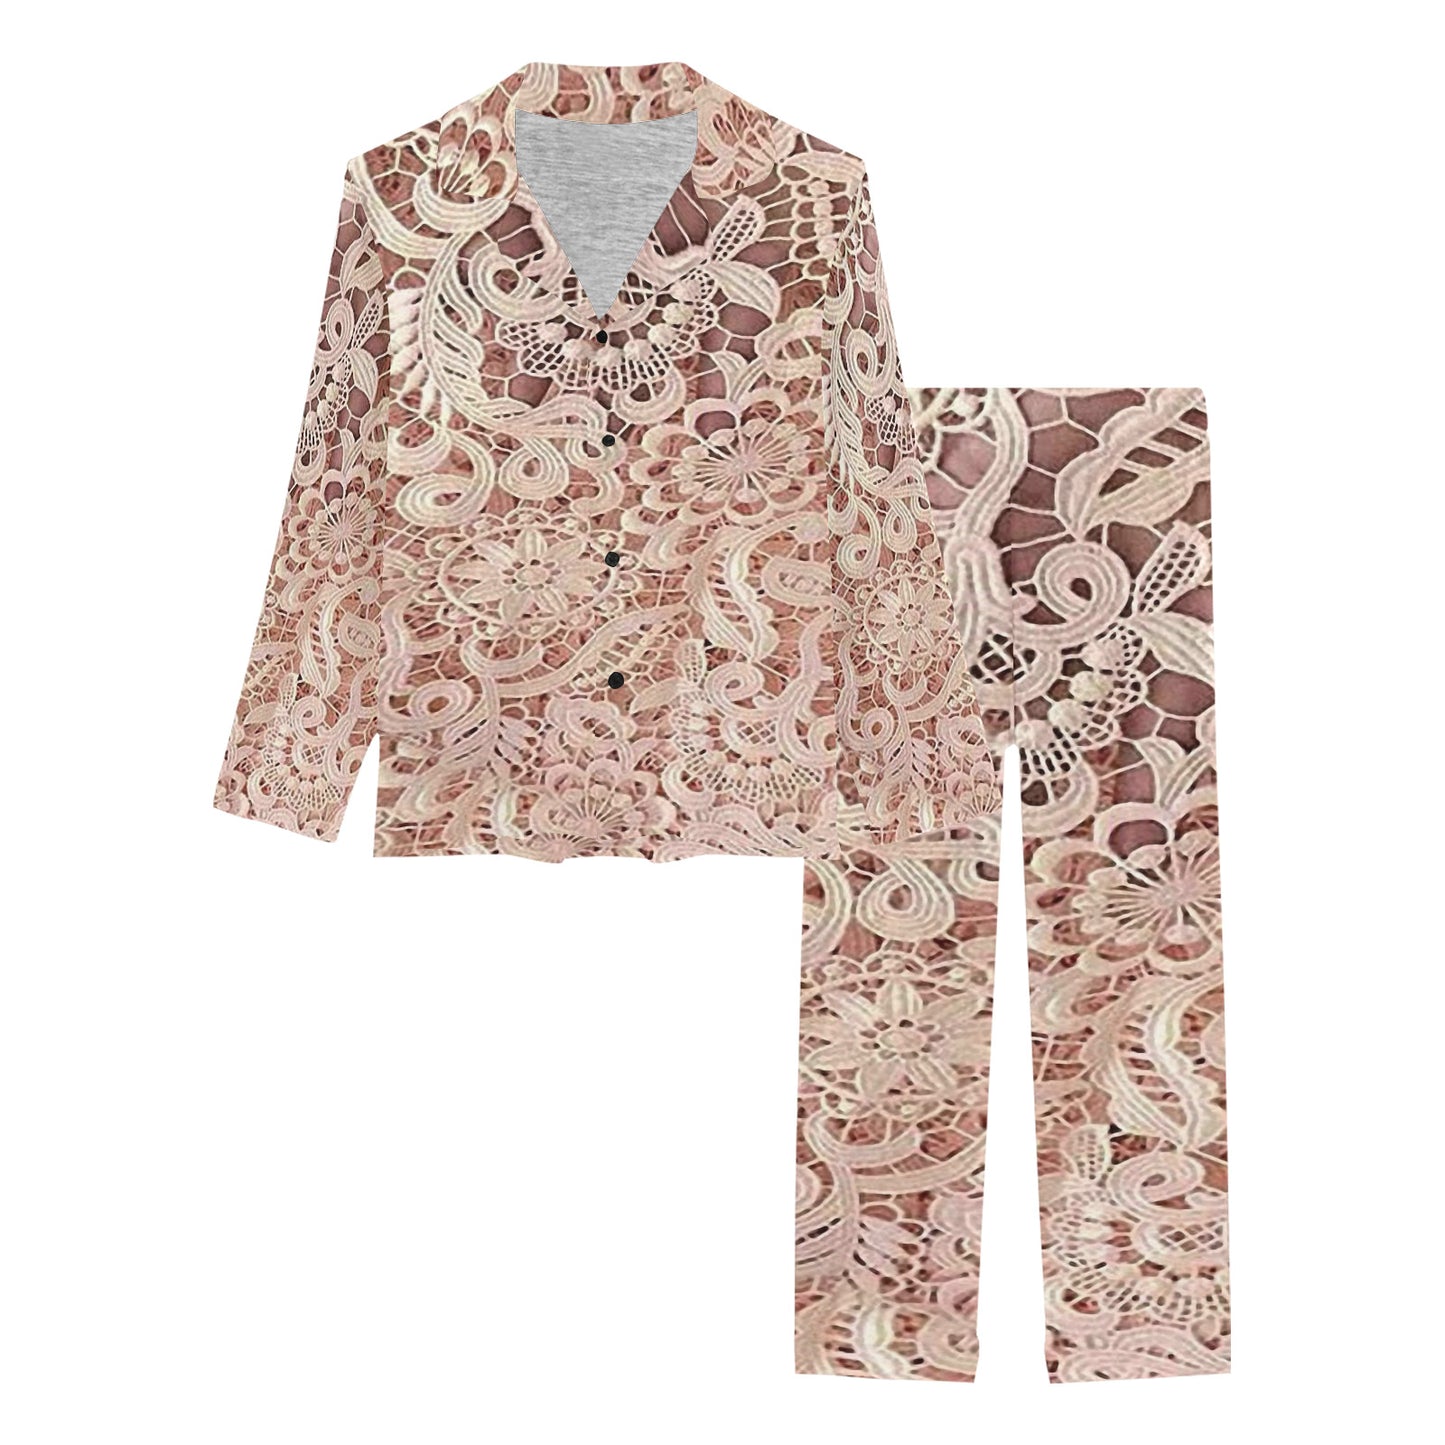 Victorian printed lace pajama set, design 11 Women's Long Pajama Set (Sets 02)